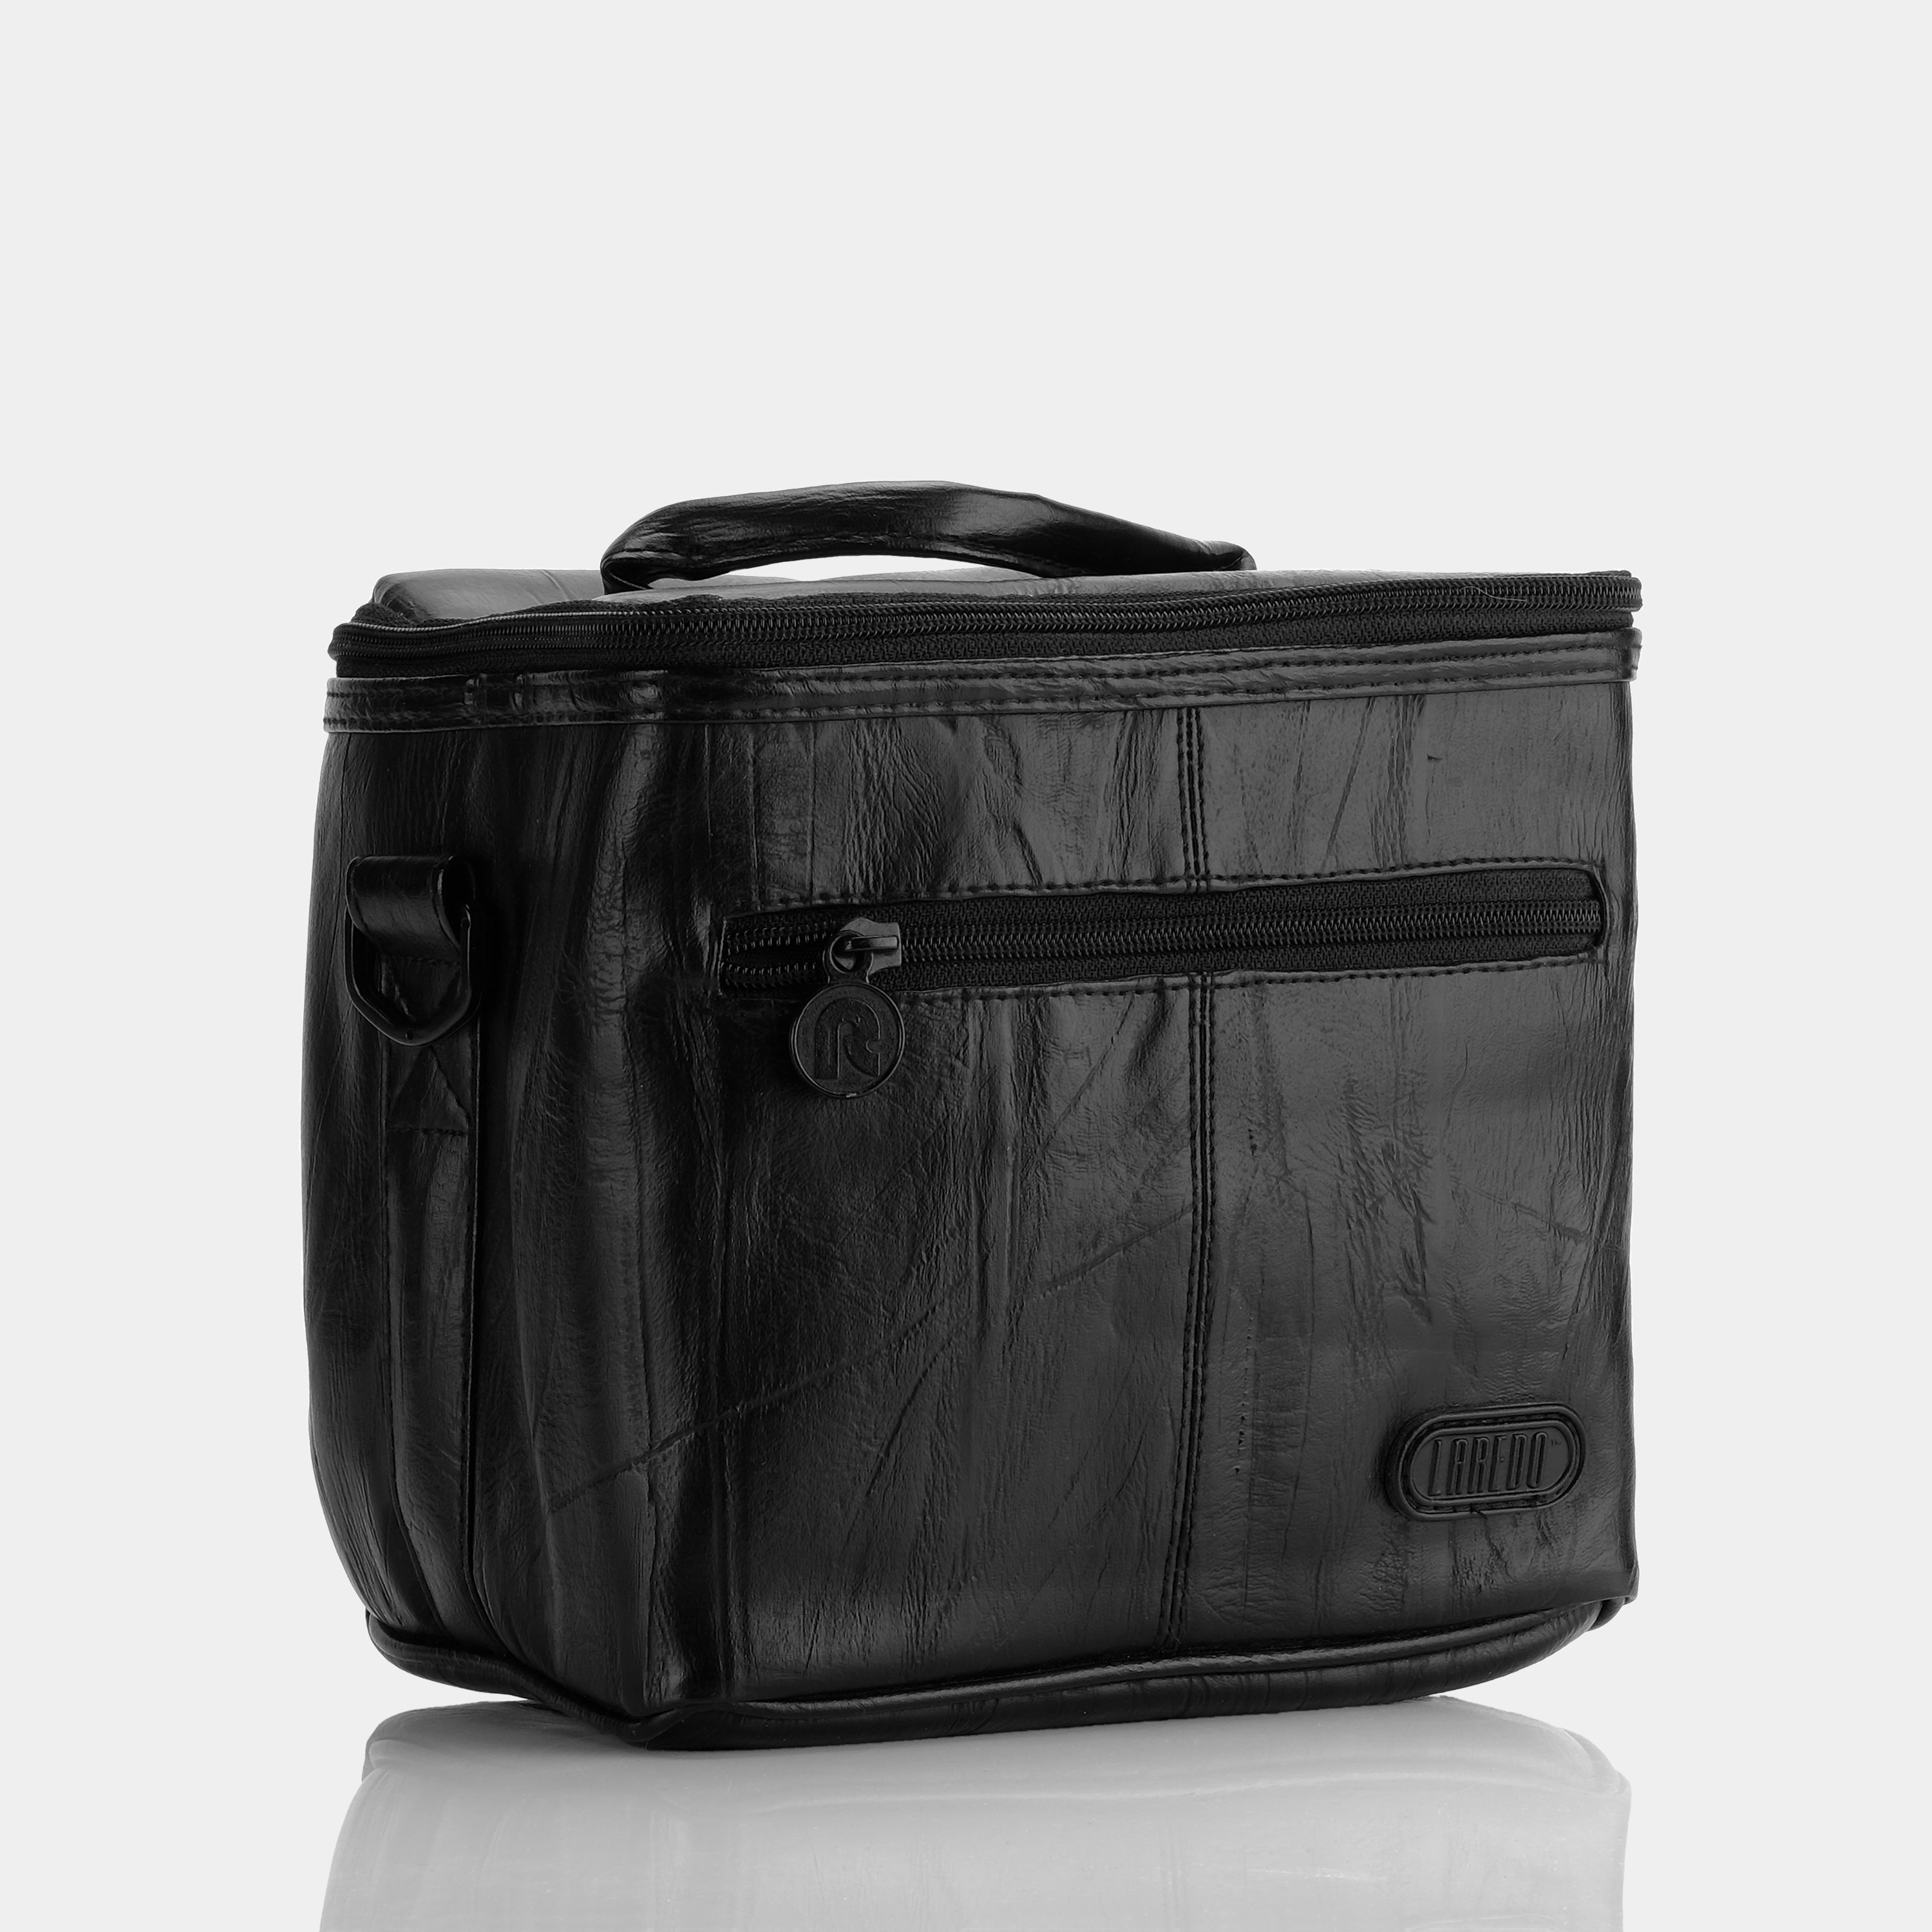 Lardeo Black Camera Bag